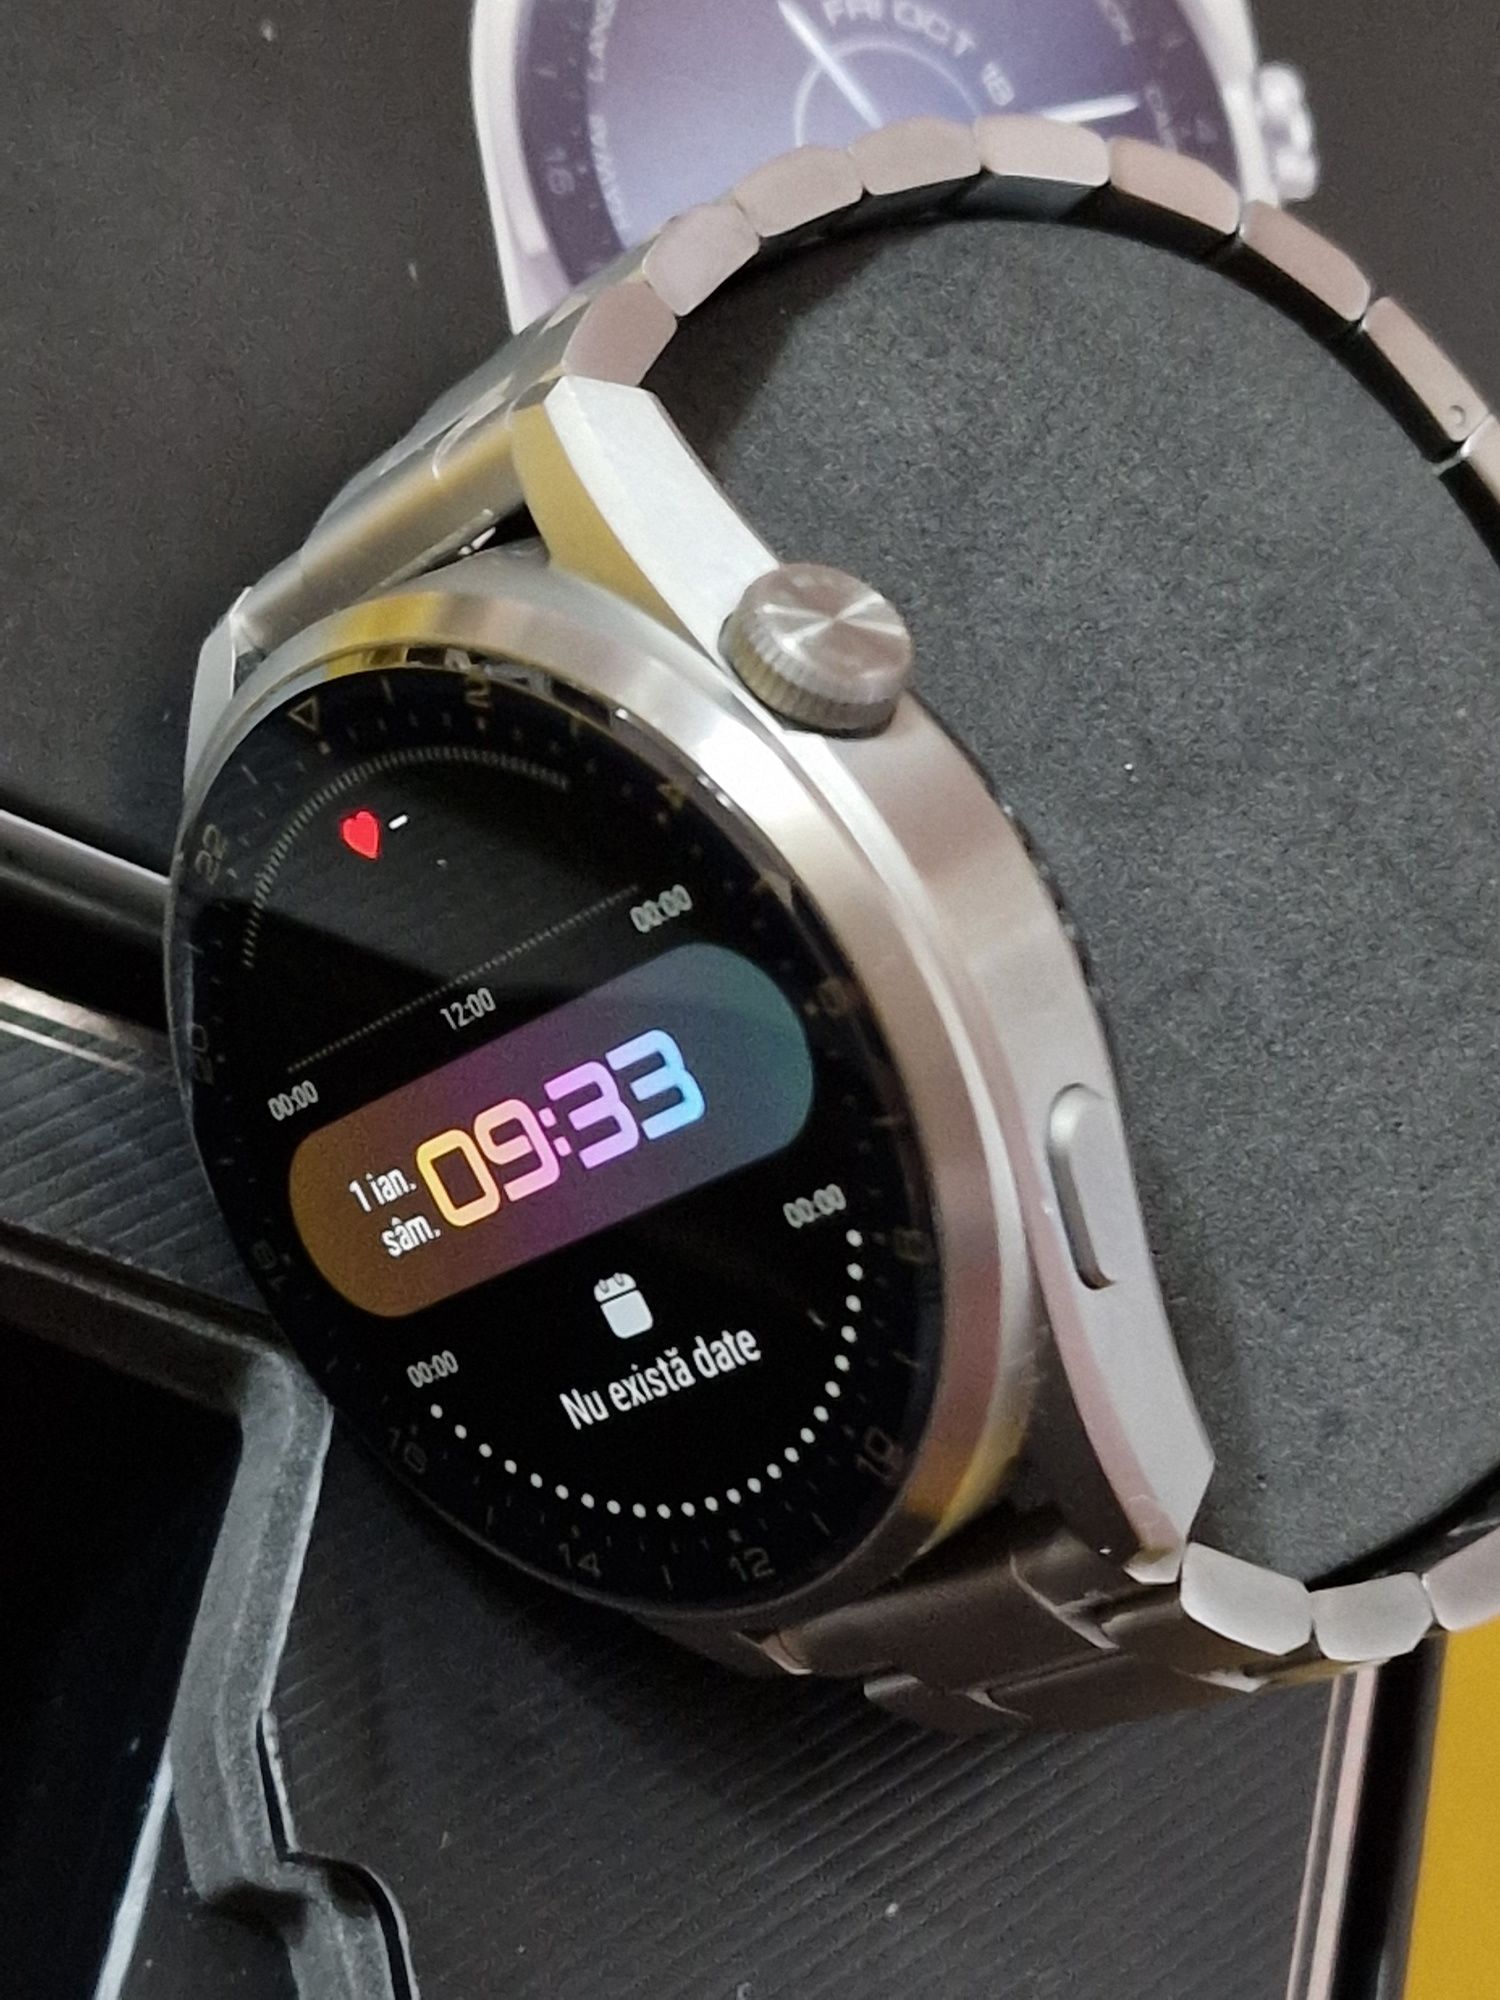 Ceas smartwatch Huawei Watch 3 Pro, 48 mm, Elite, Titanium, E-Sim.